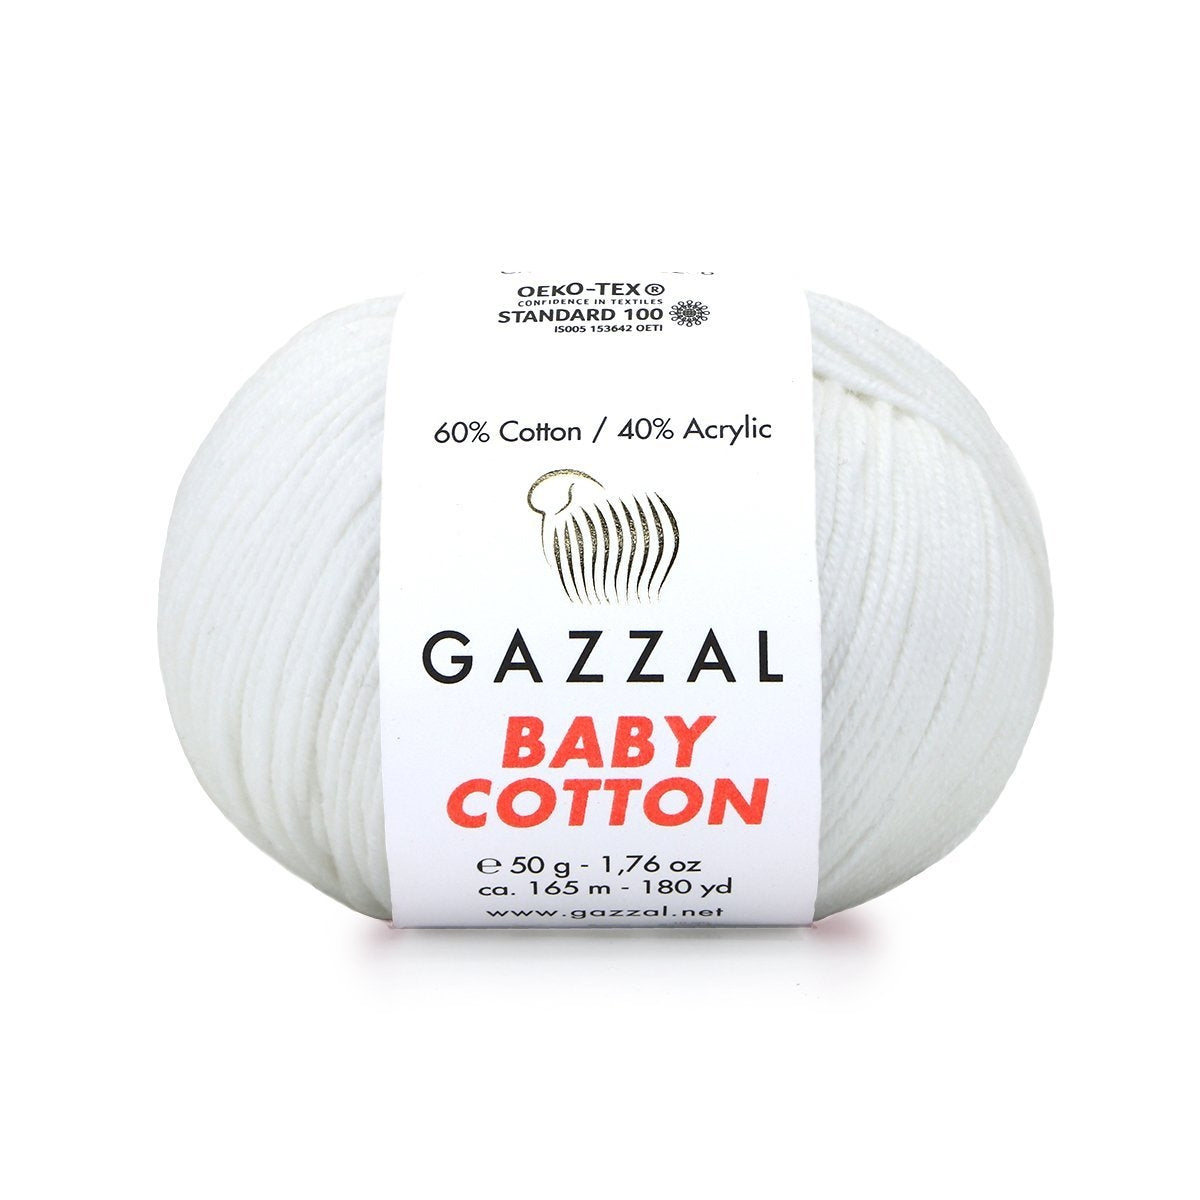 Gazzal Baby Cotton siūlai 50g (medvilnė, akrilanas)